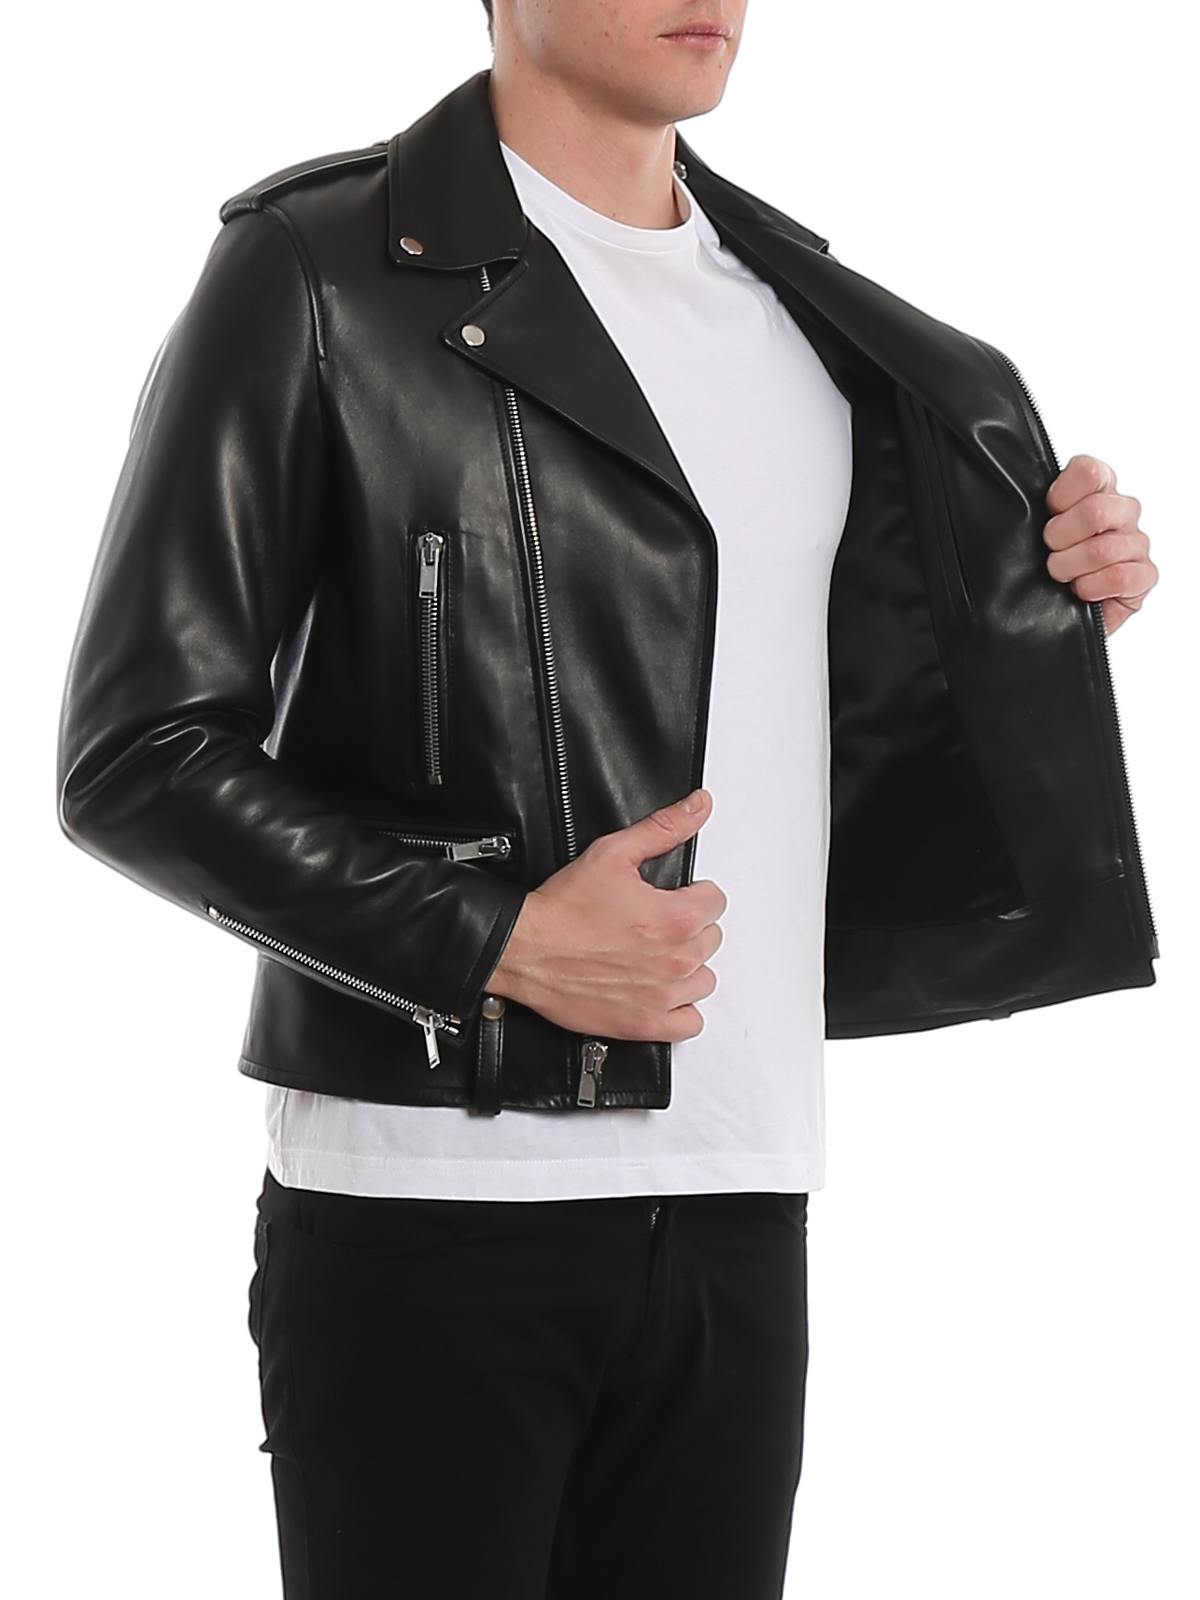 Leather jacket Saint Laurent - Leather jacket - 484284Y5YA21000